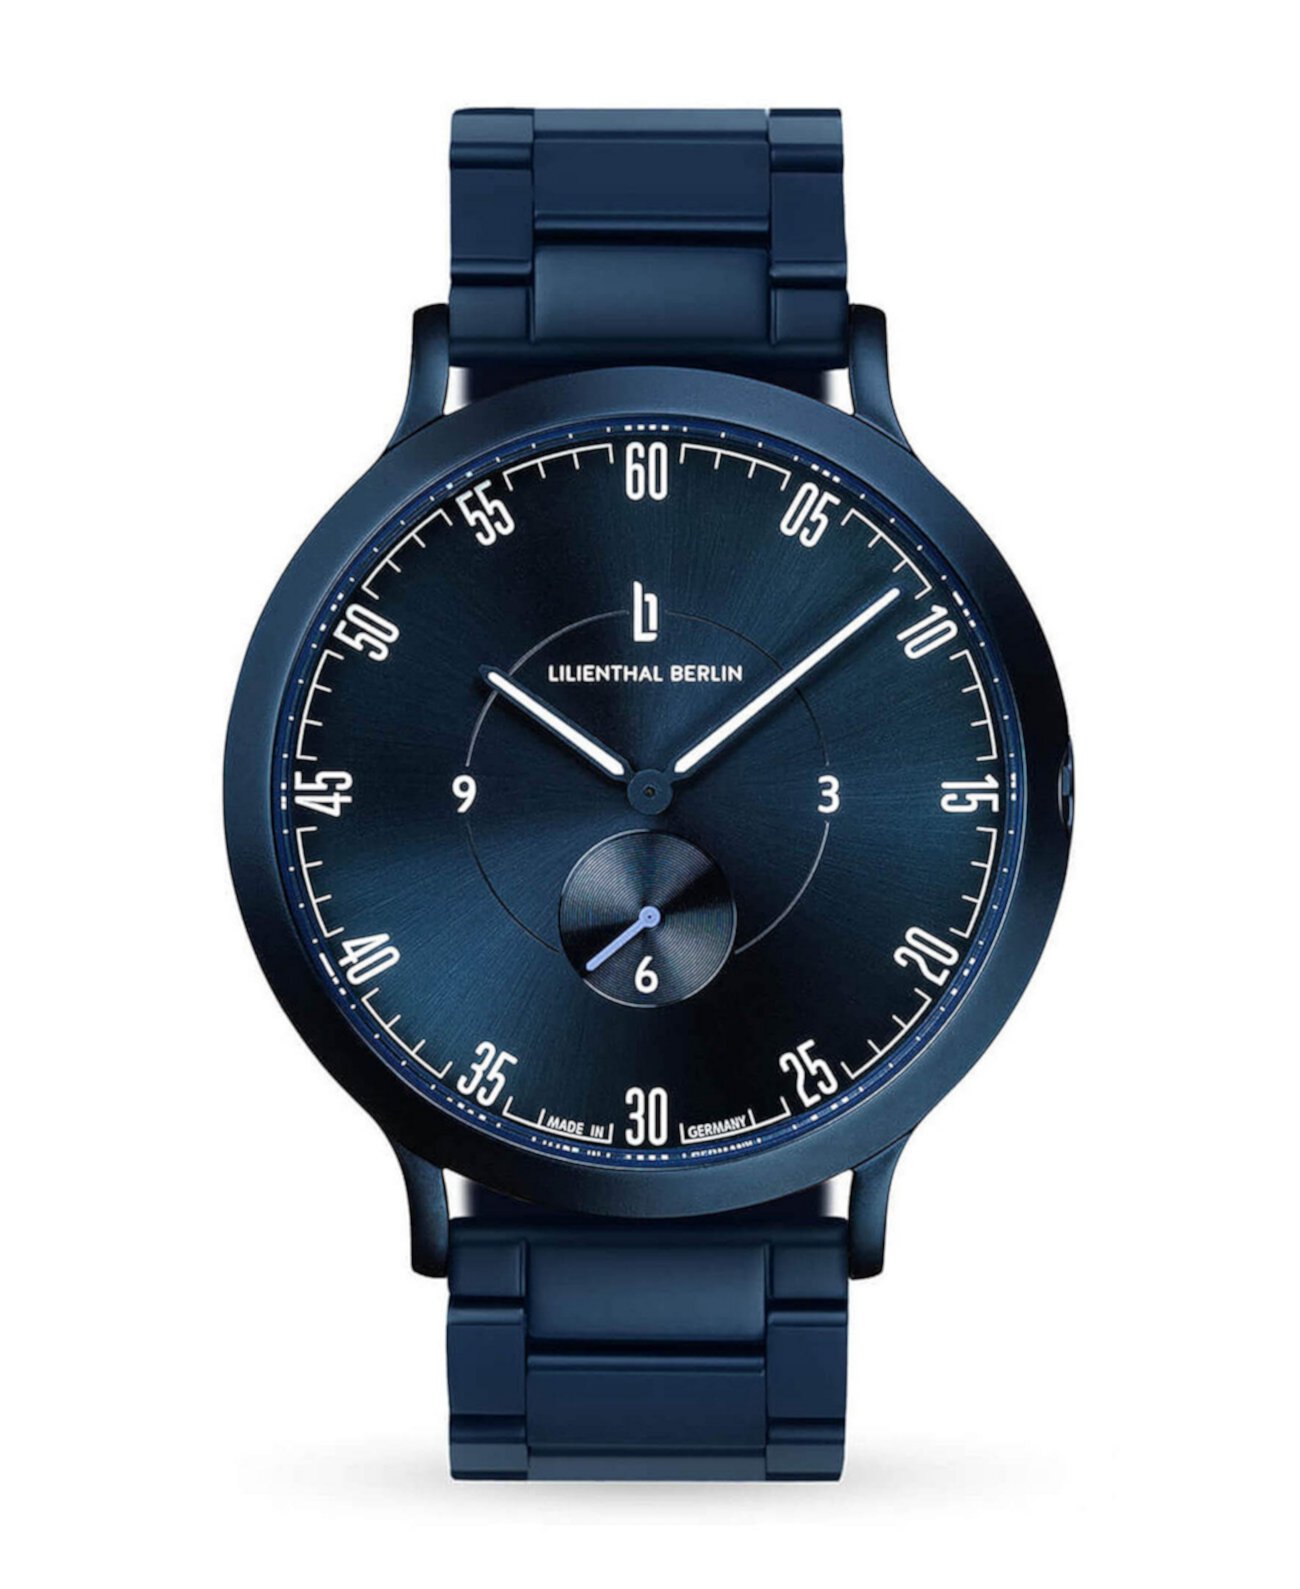 Мужские часы Lilienthal 1 1 All Blue Blue из нержавеющей стали с звеньями, 42 мм Lilienthal Berlin